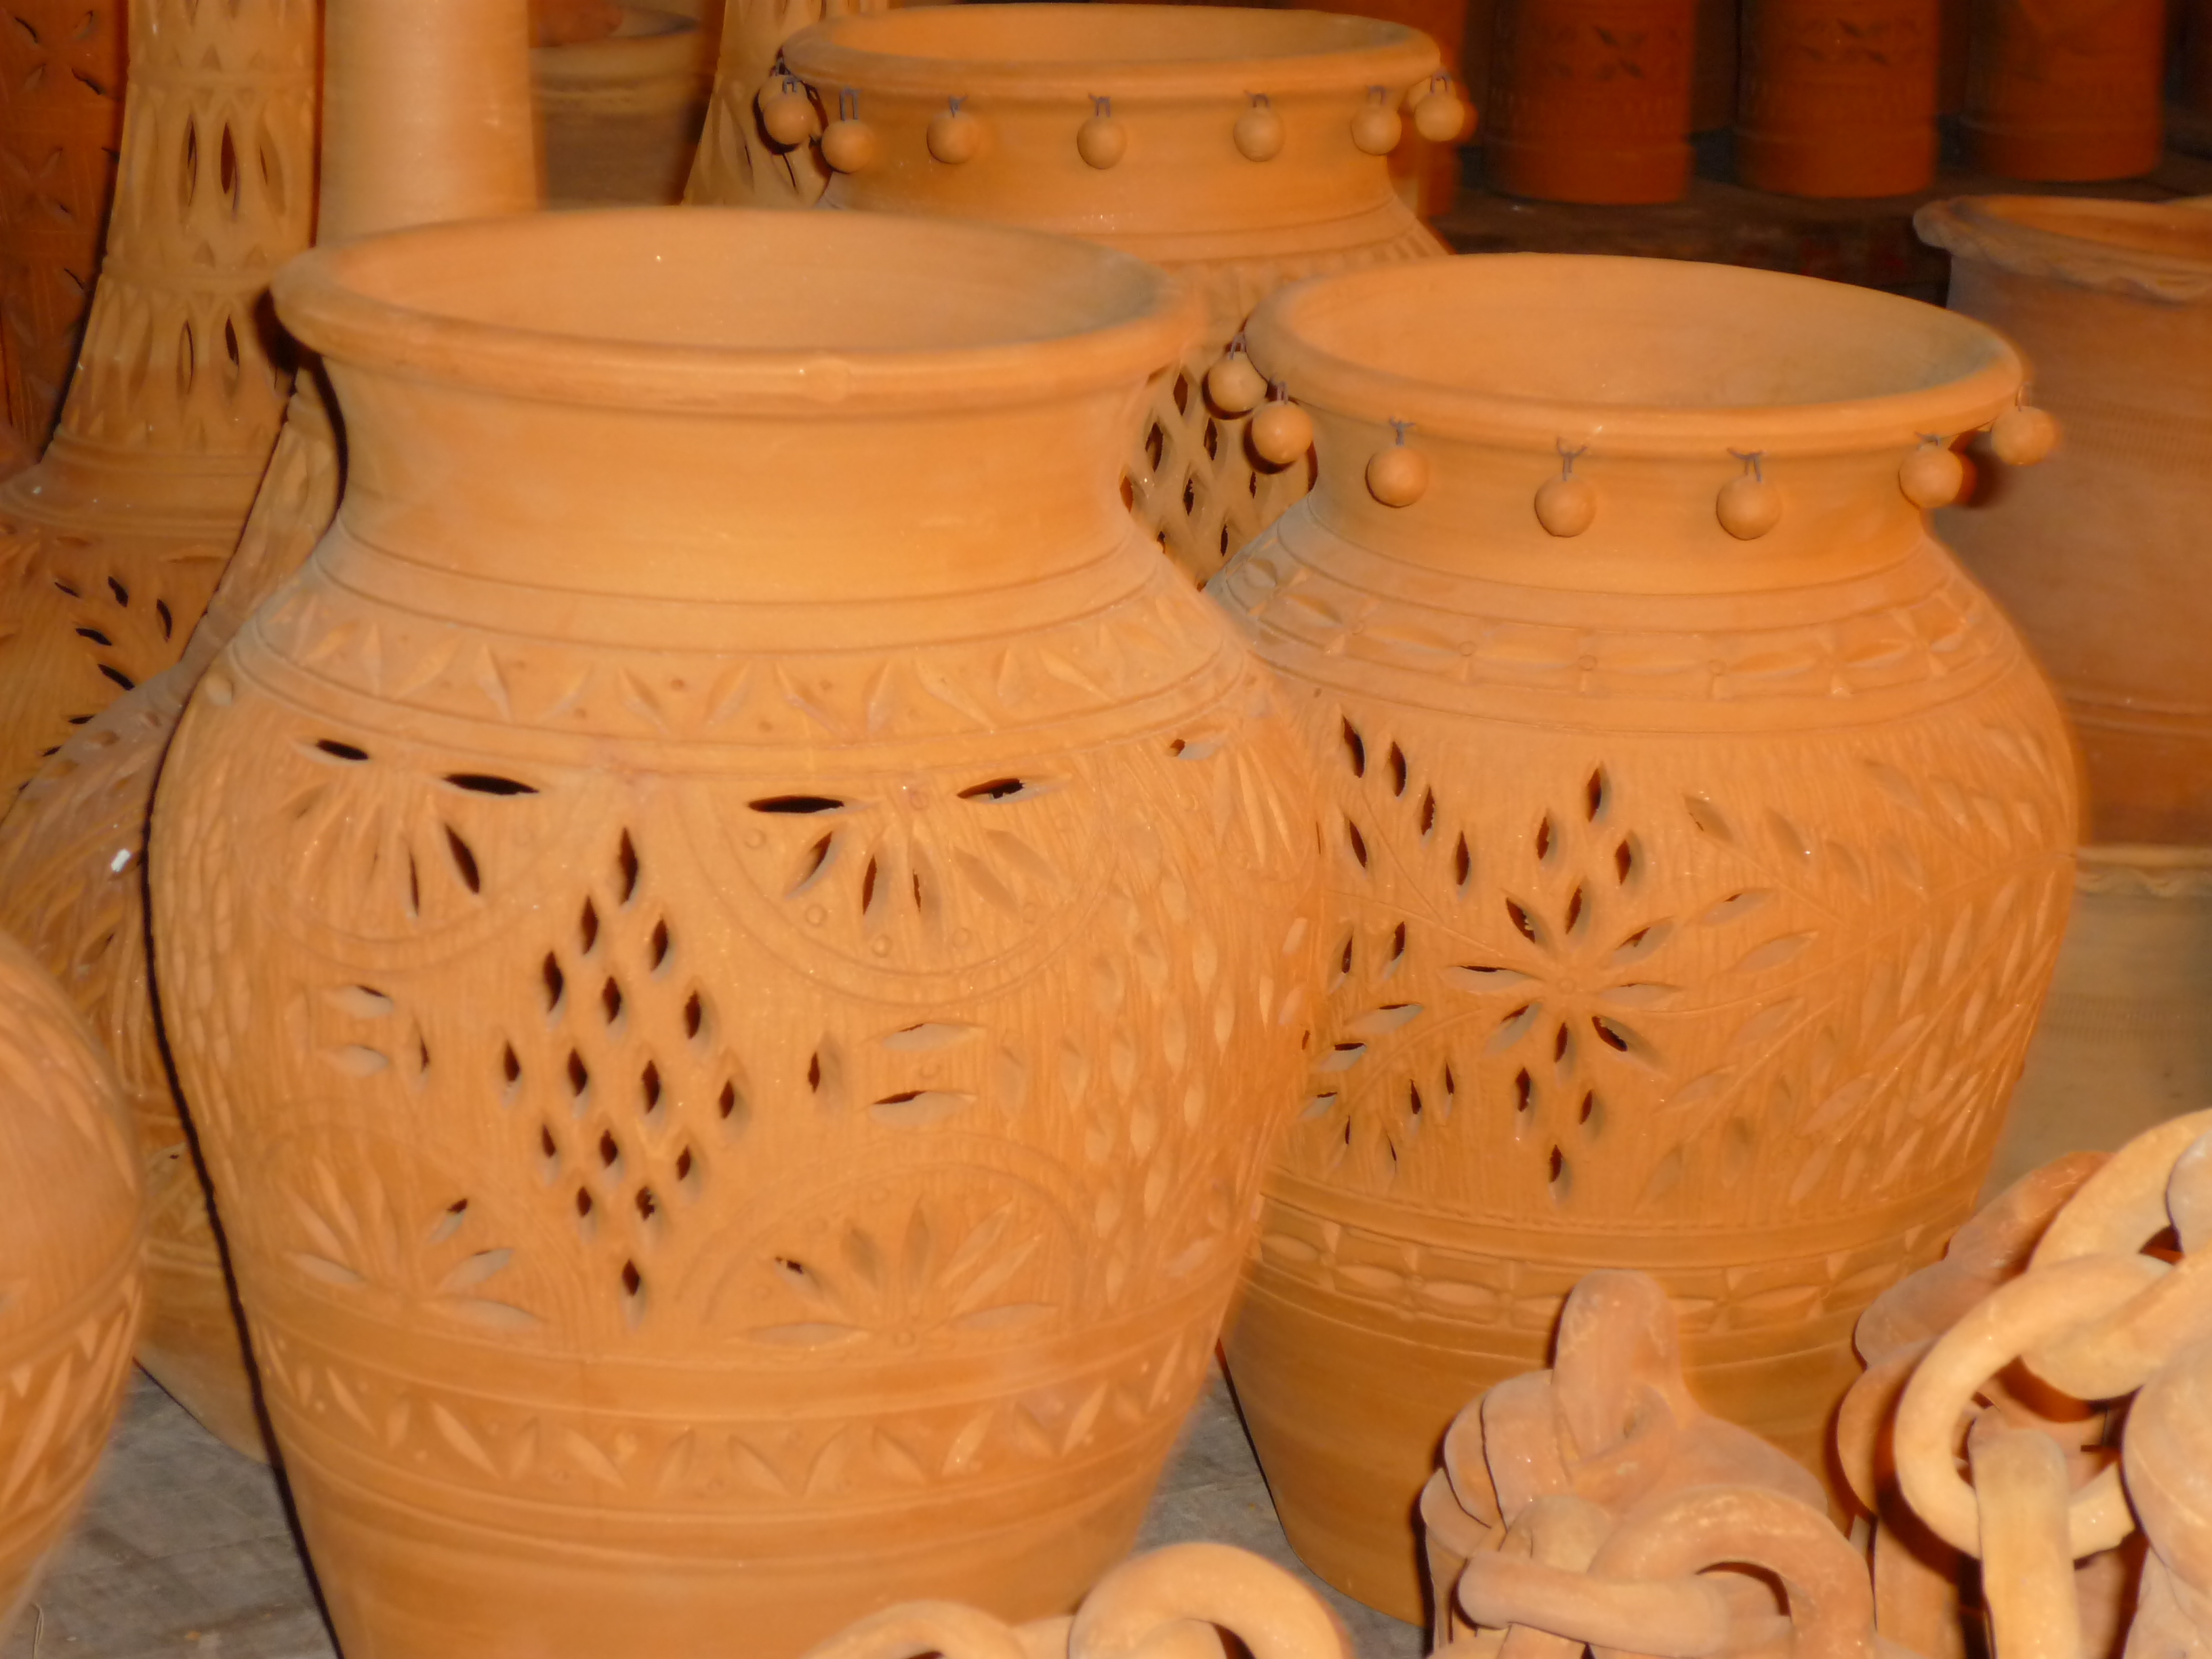 File:Clay pots in punjab pakistan.JPG - Wikimedia Commons